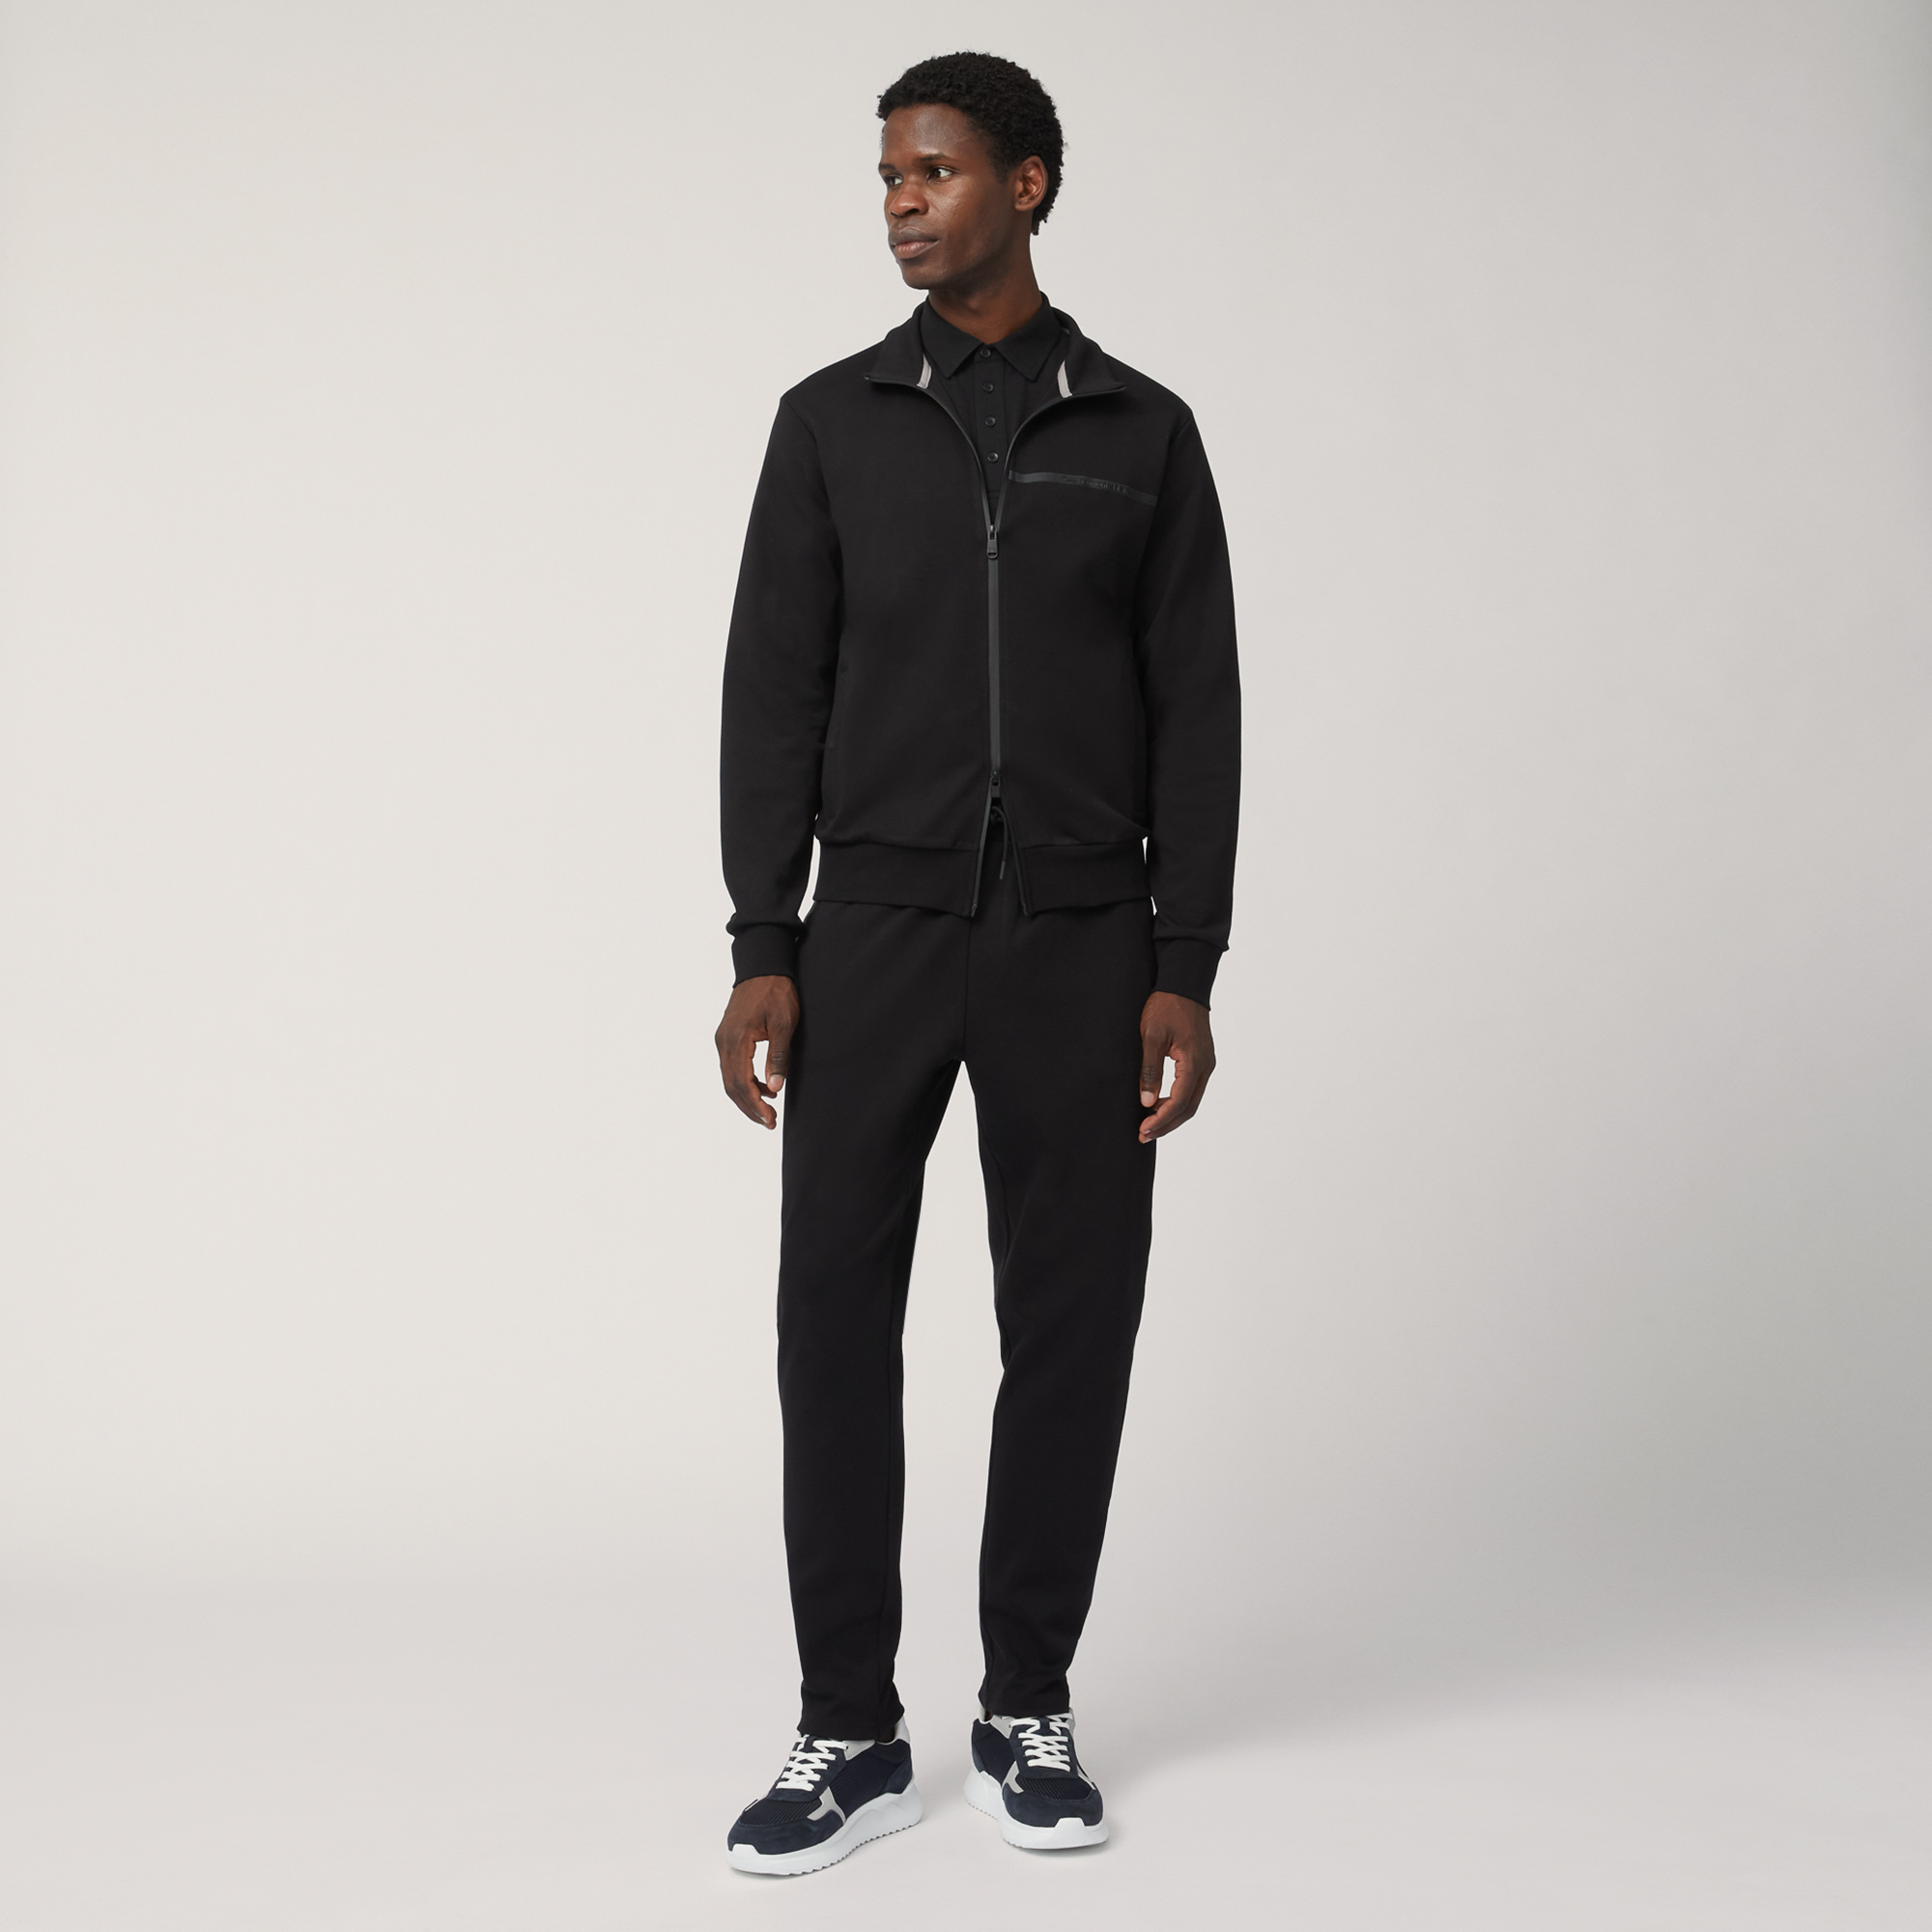 Cotton Full-Zip Sweatshirt with Heat-Sealed Details, Black, large image number 3